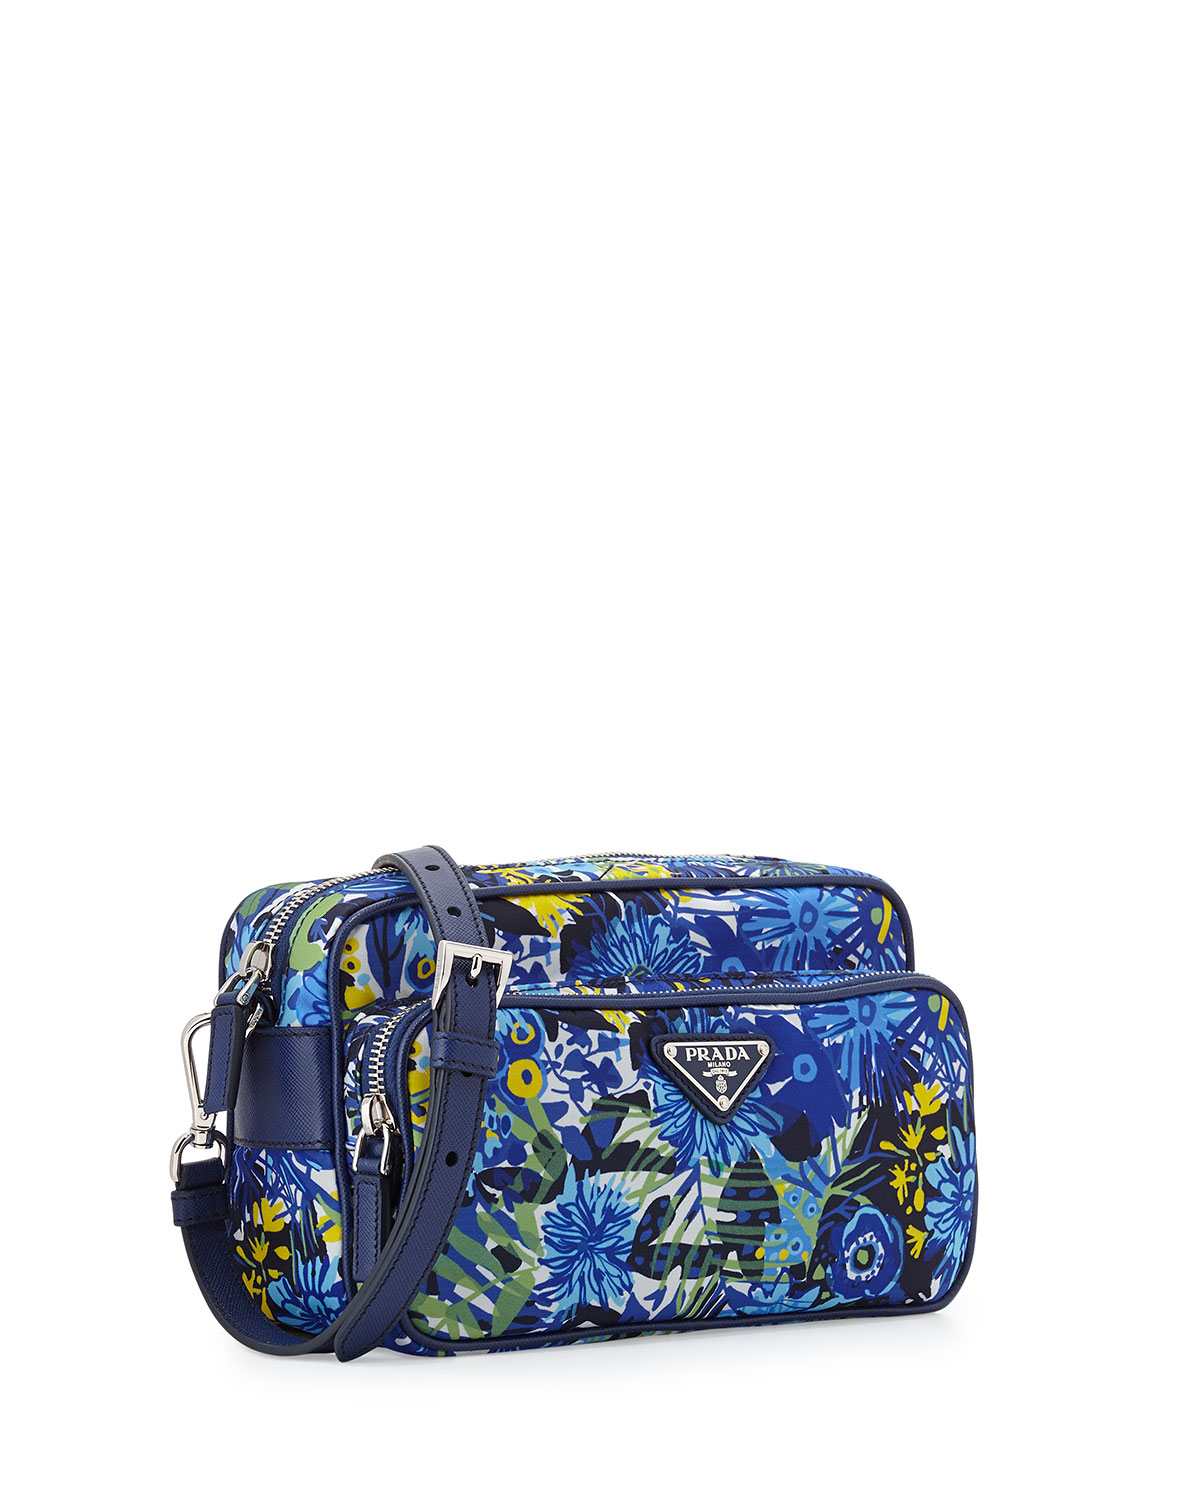 prada purse prices - Prada Tessuto Printed Crossbody Bag in Blue (BLUE FLORAL) | Lyst